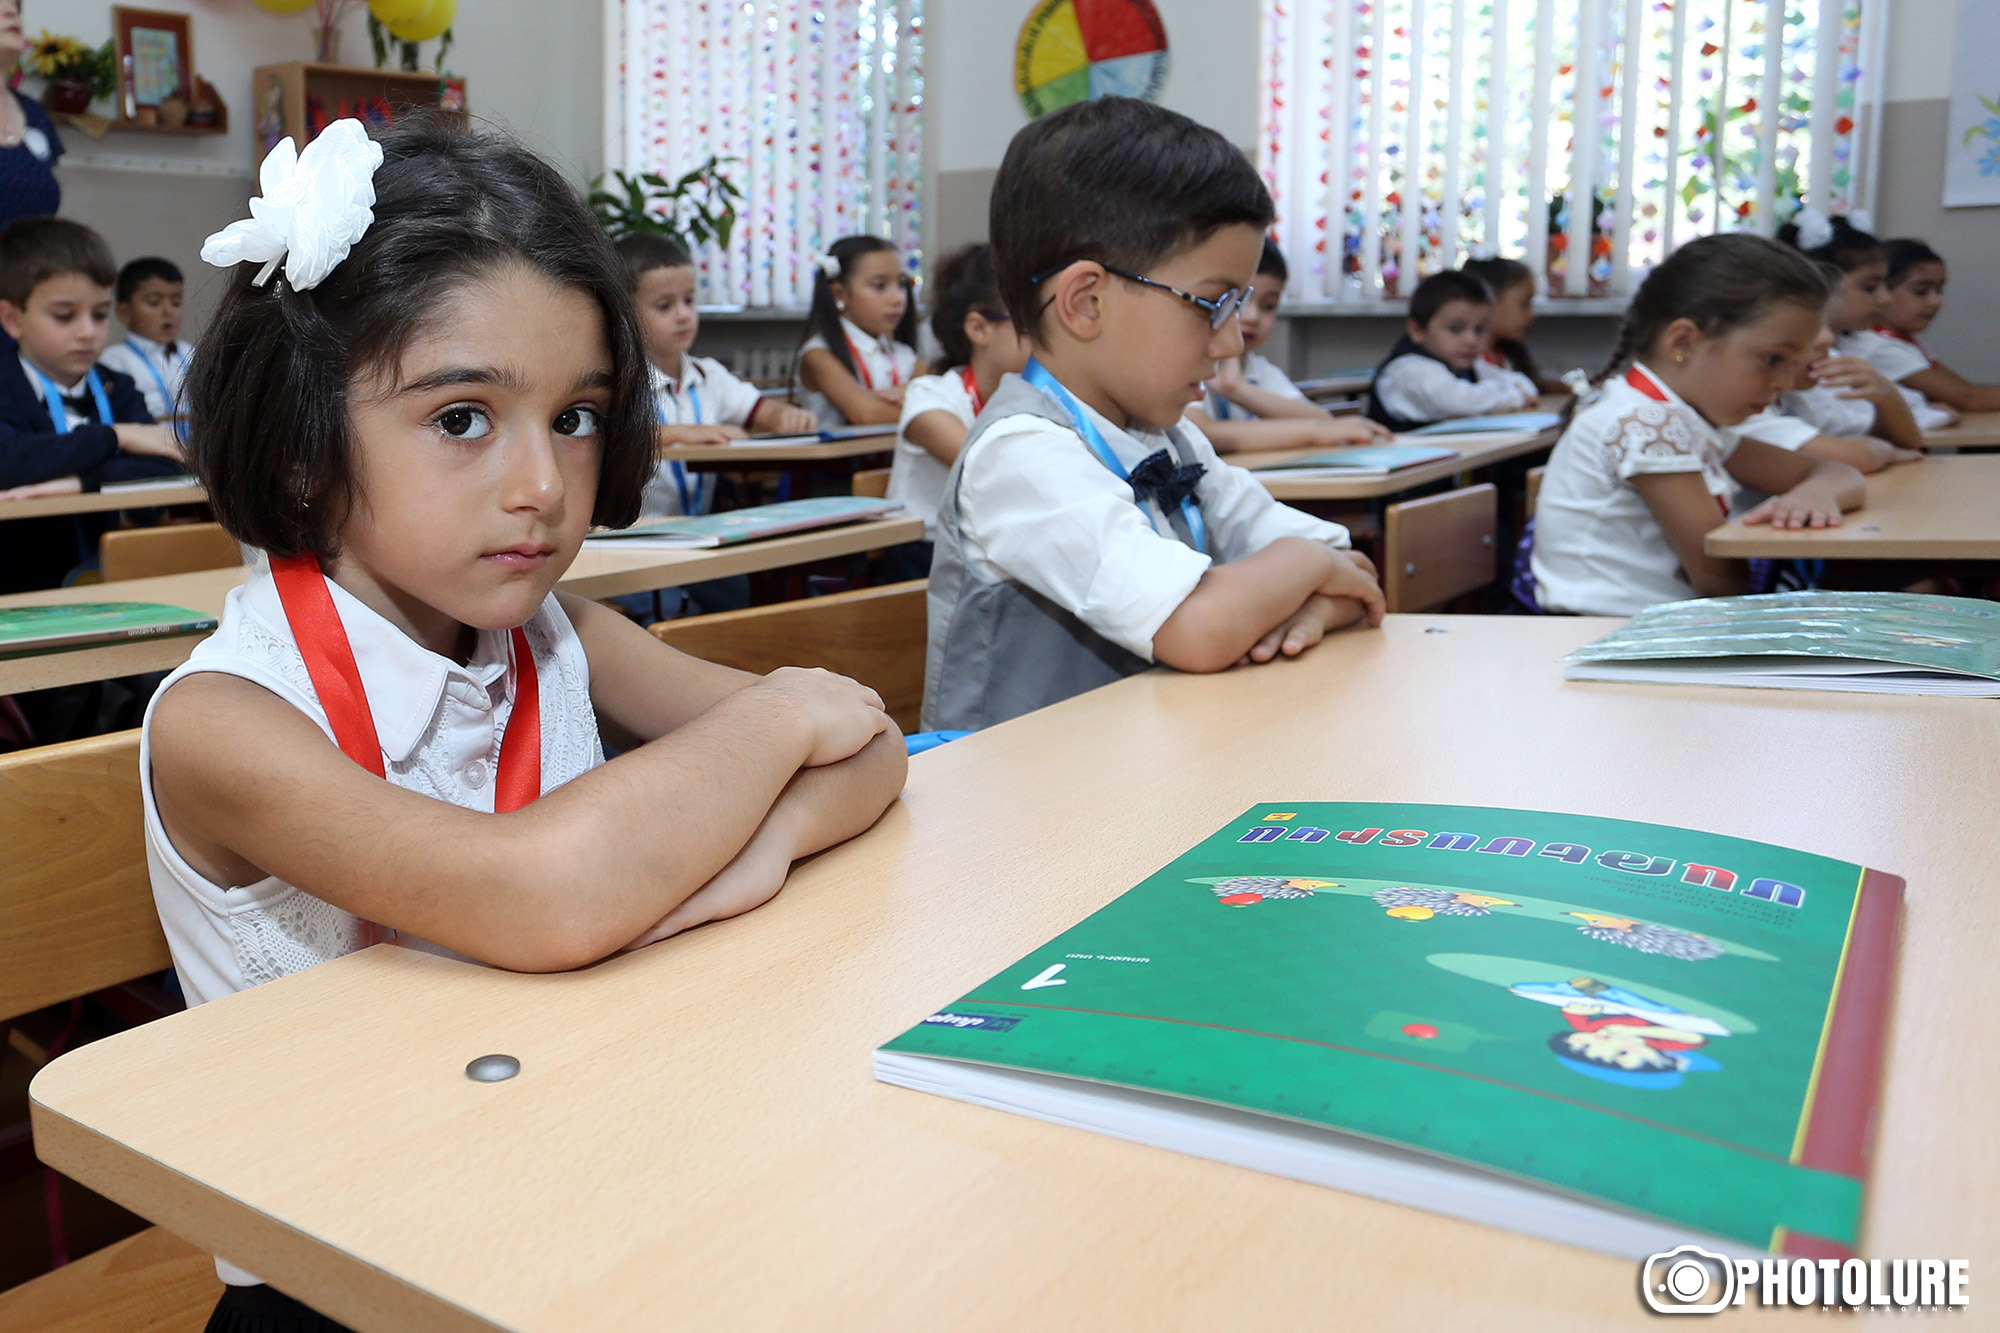 Covid-19: Armenia considers extending the school break for another week